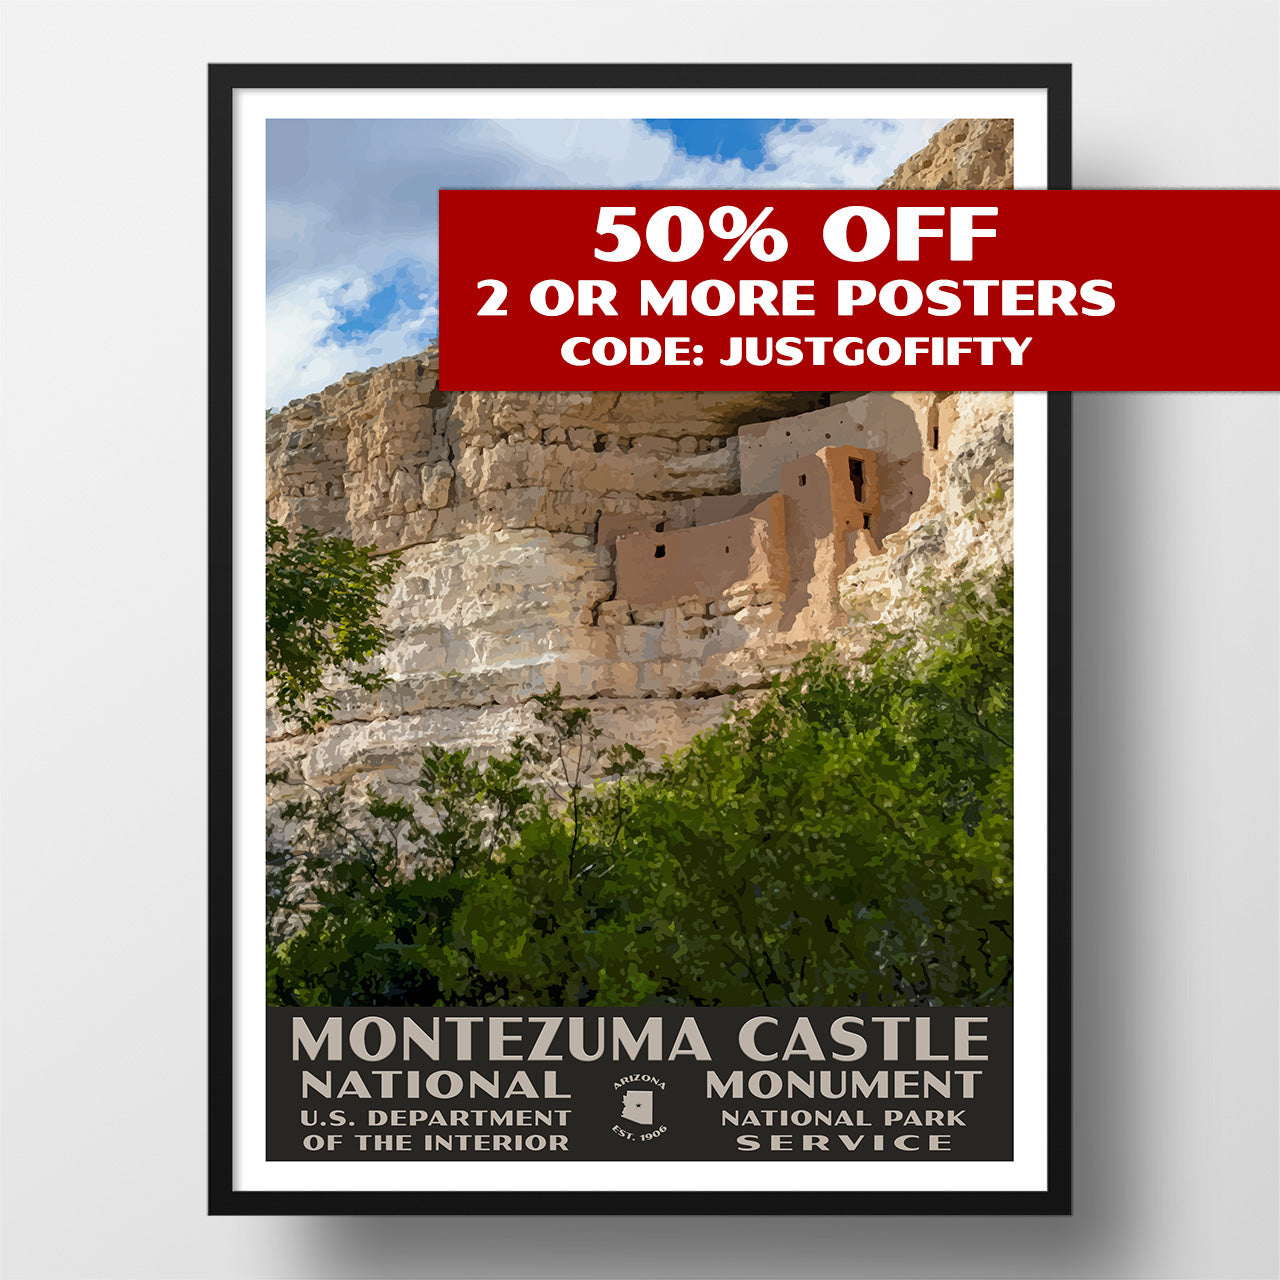 Montezuma Castle National Monument poster